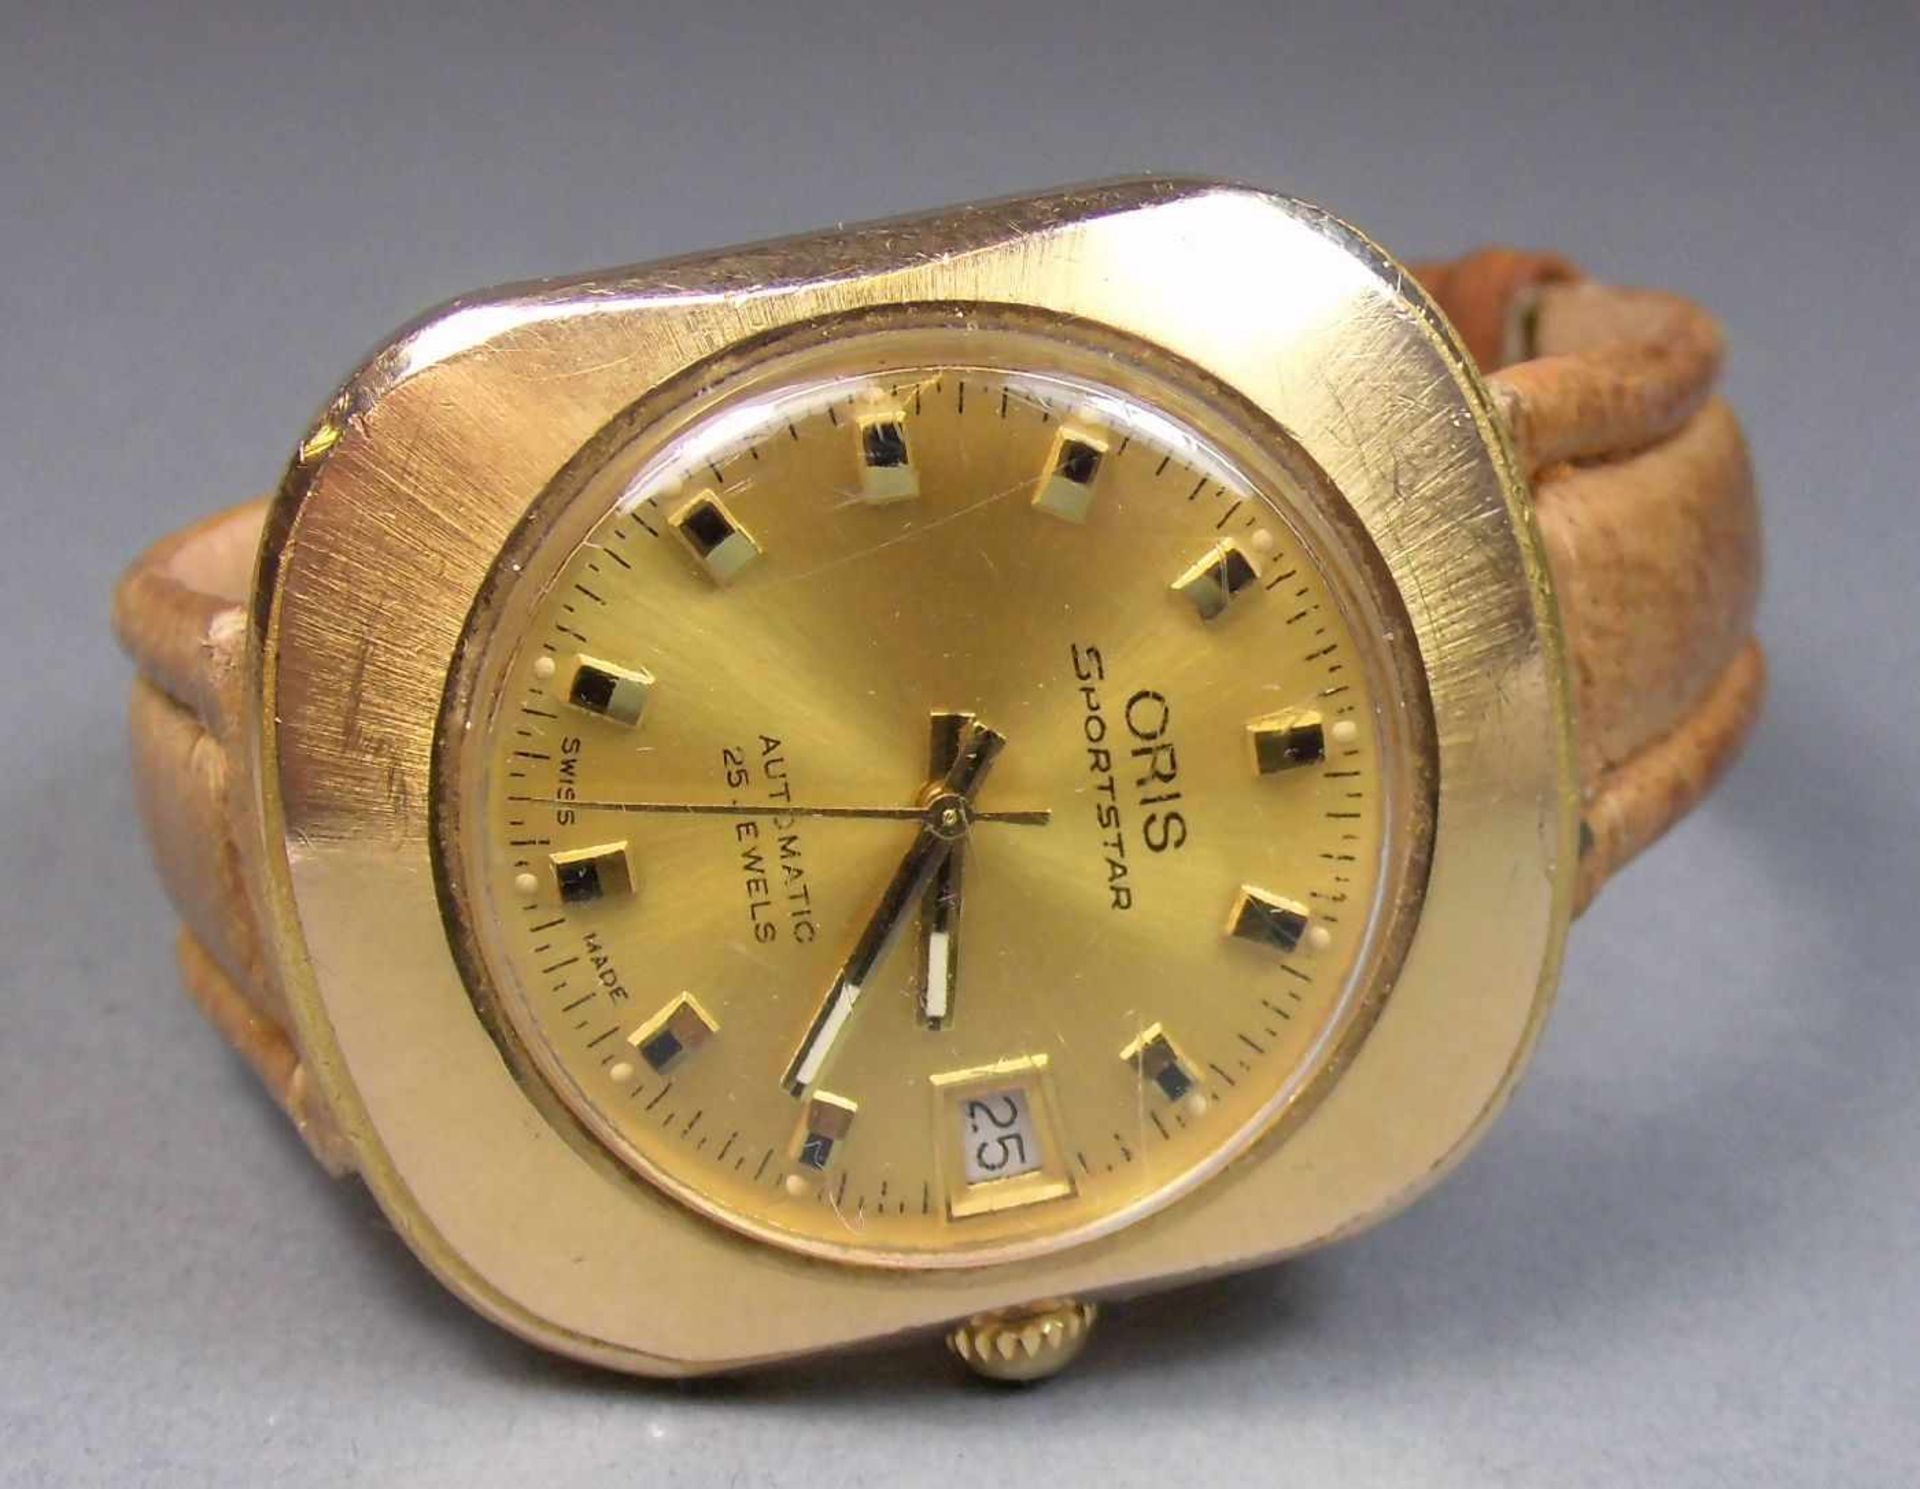 VINTAGE ARMBANDUHR ORIS "SPORTSTAR" AUTOMATIC / wristwatch, Swiss made, vergoldetes - Bild 2 aus 4